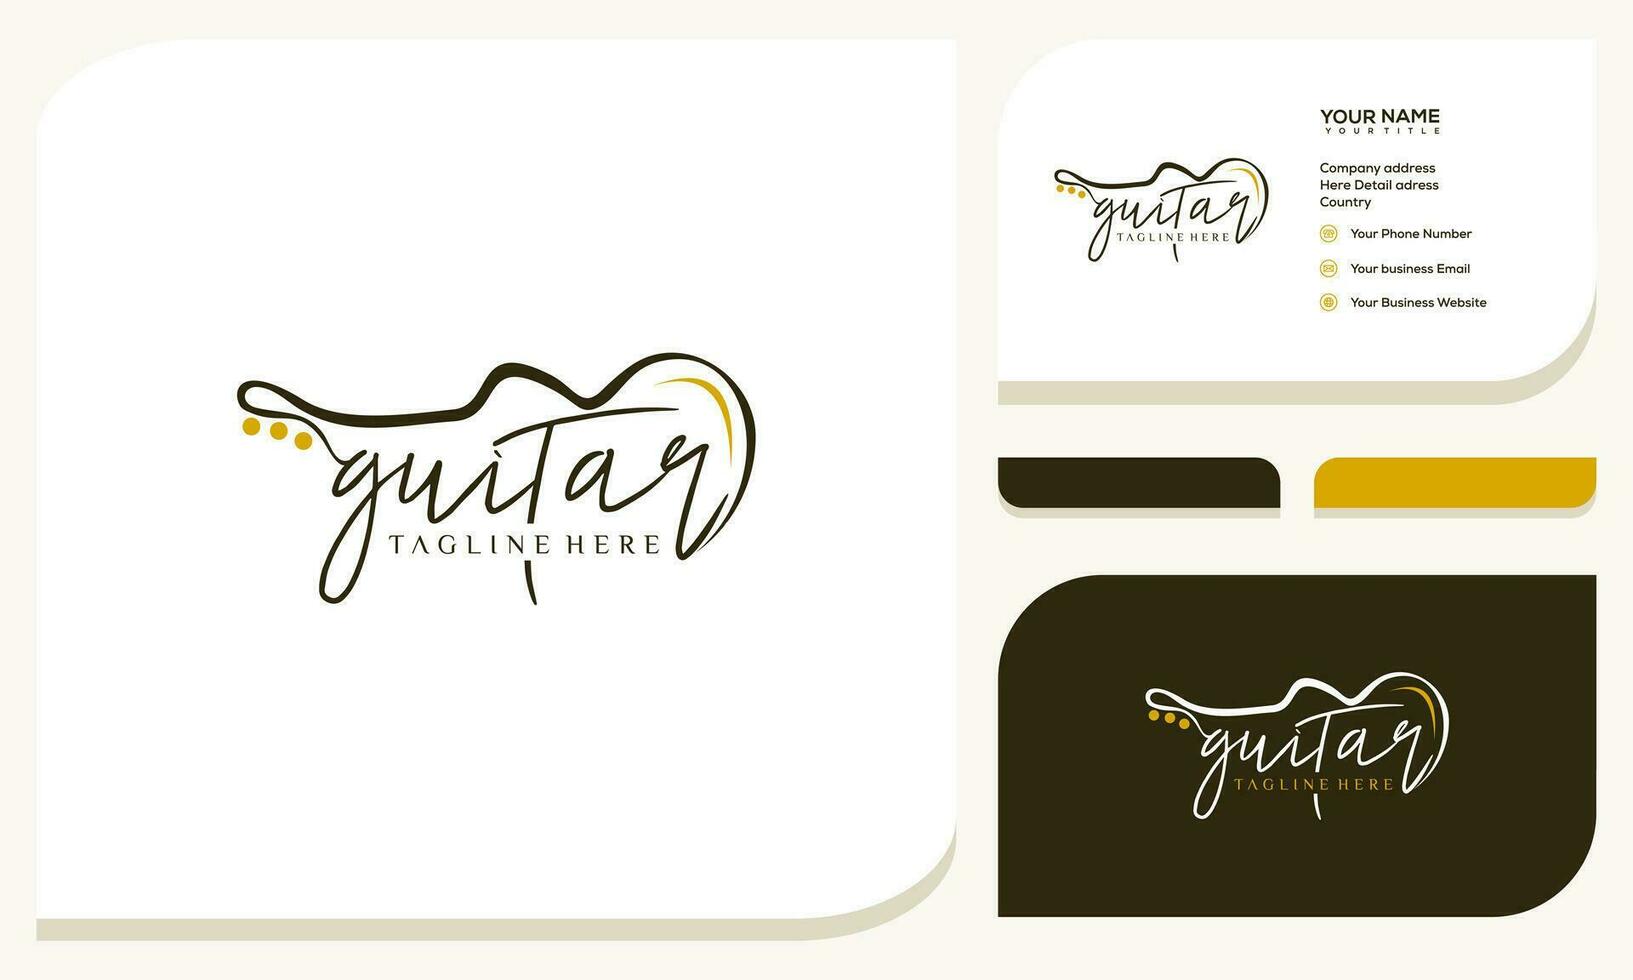 Guitar instrument simple logo design inspiration. logo and business card vector